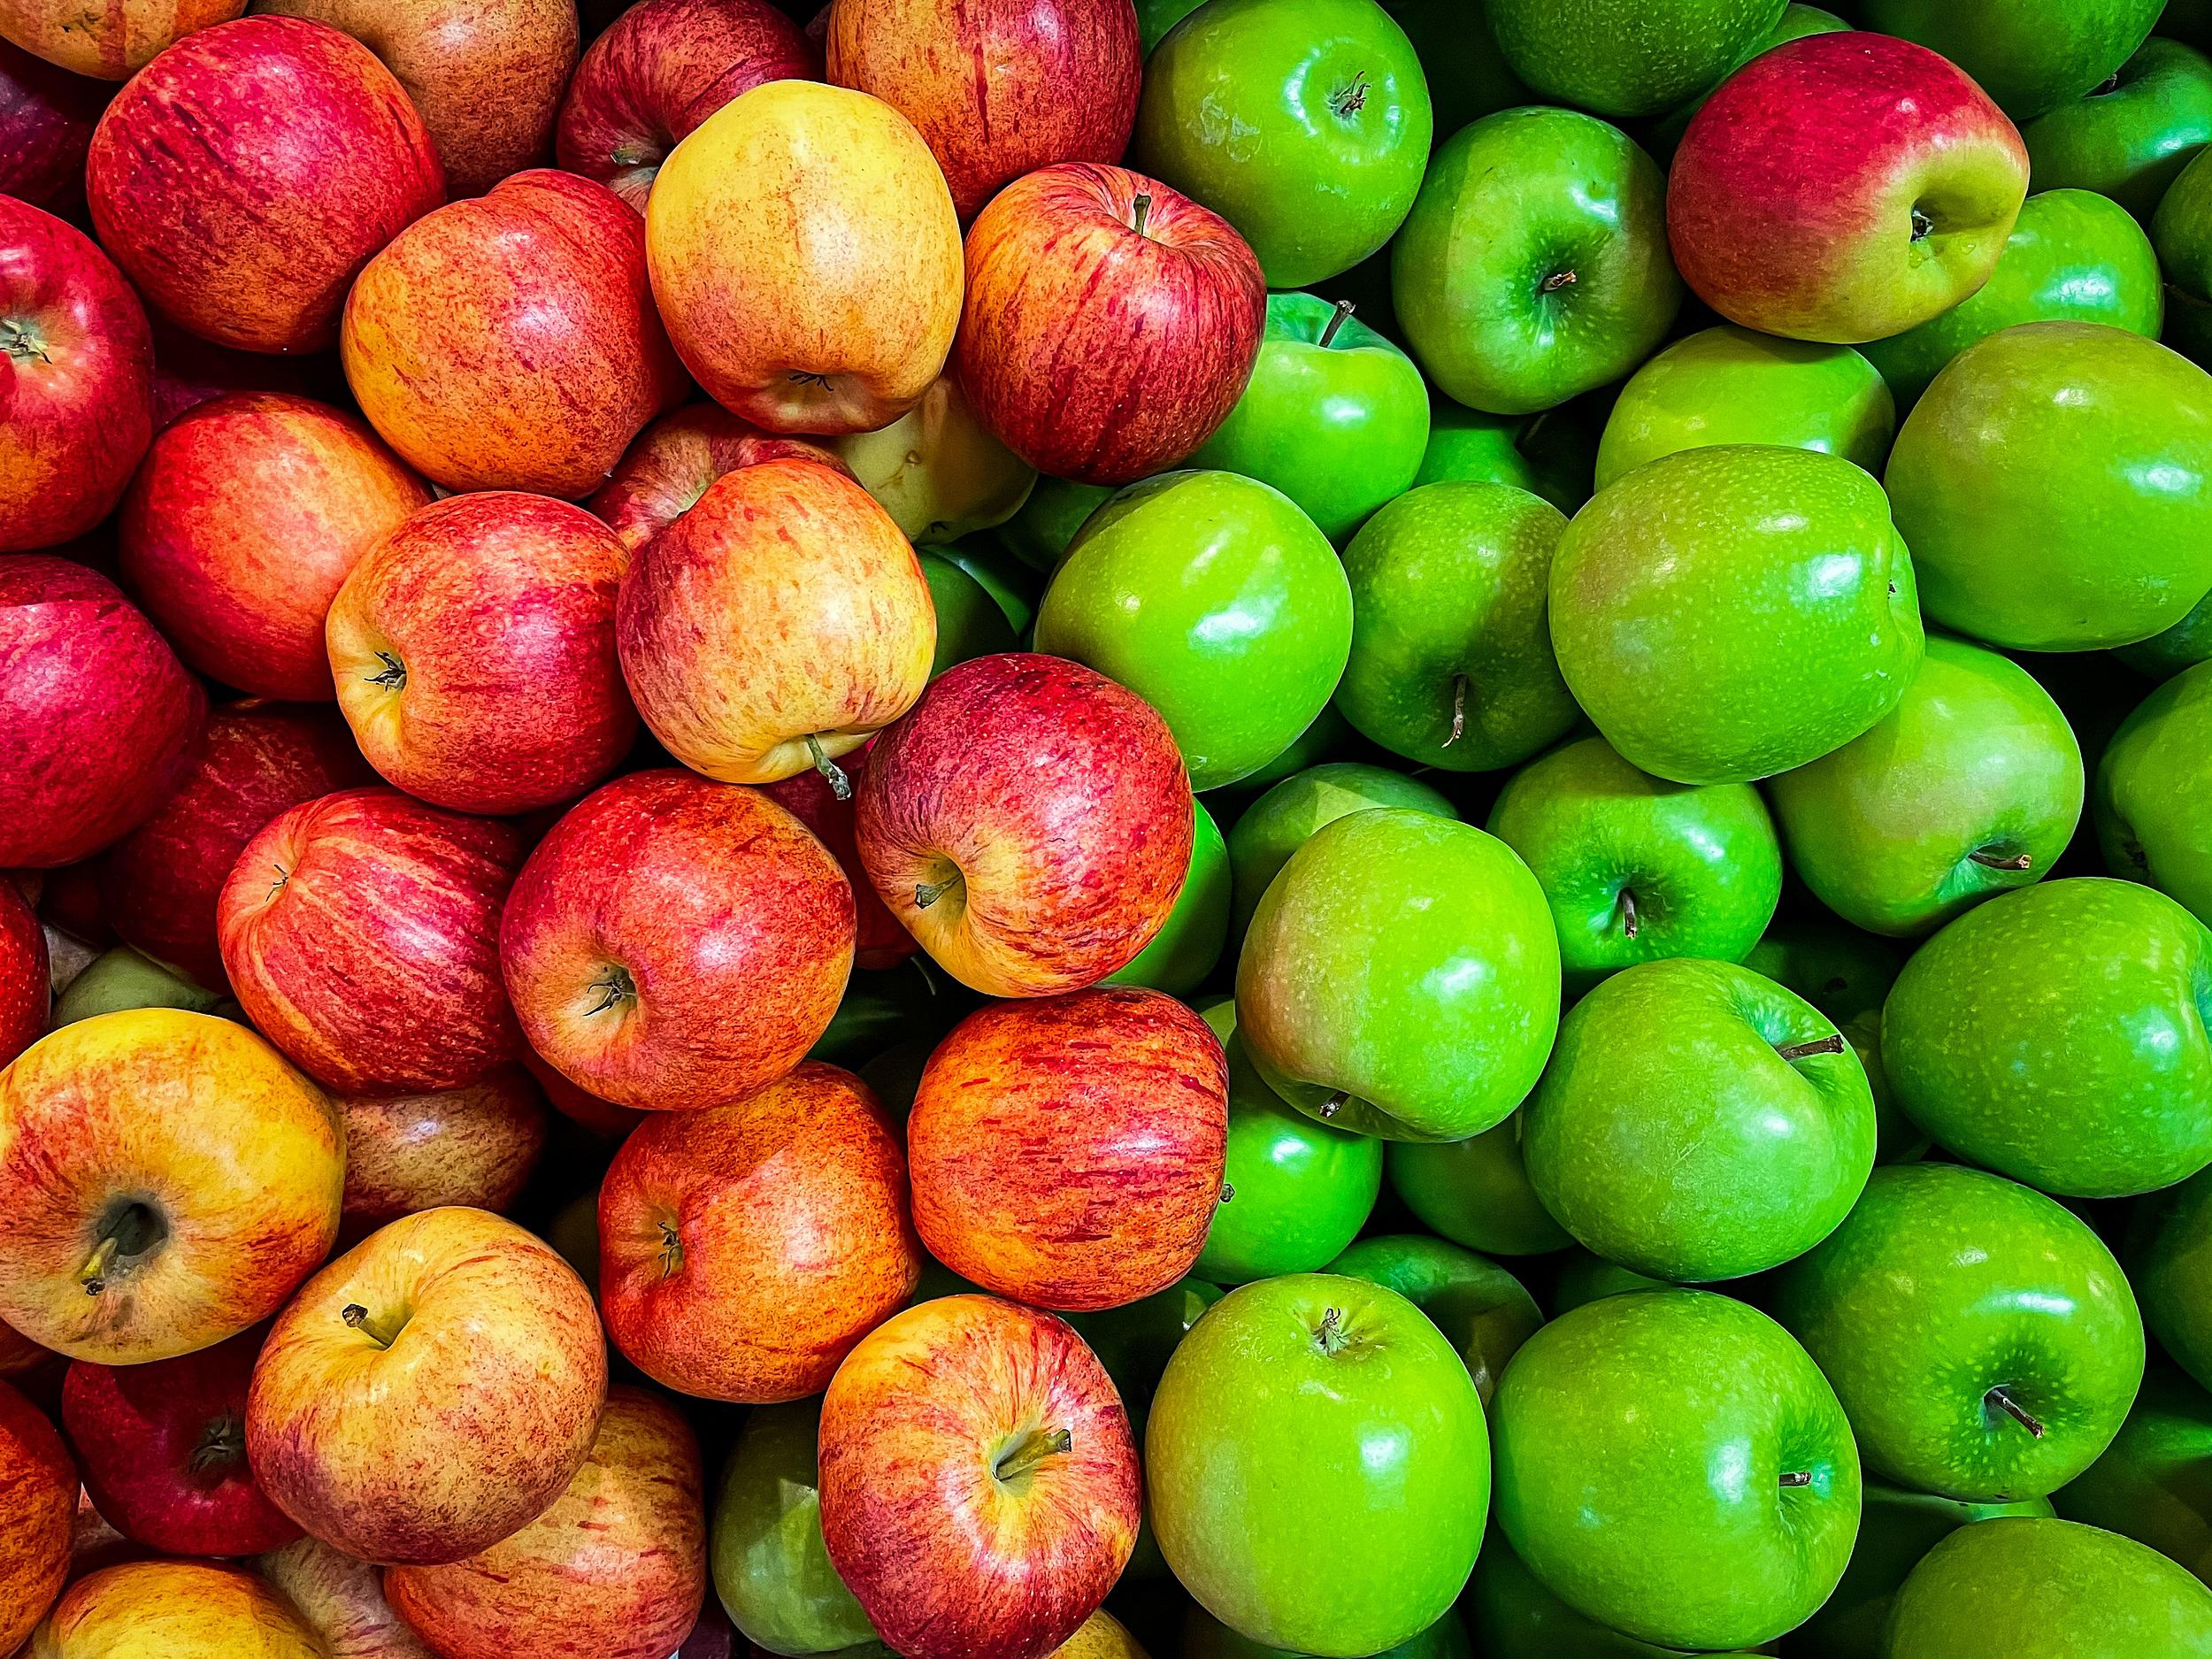 Fuji Apples - Organic Fuji Apple Growers - Washington Fruit Growers